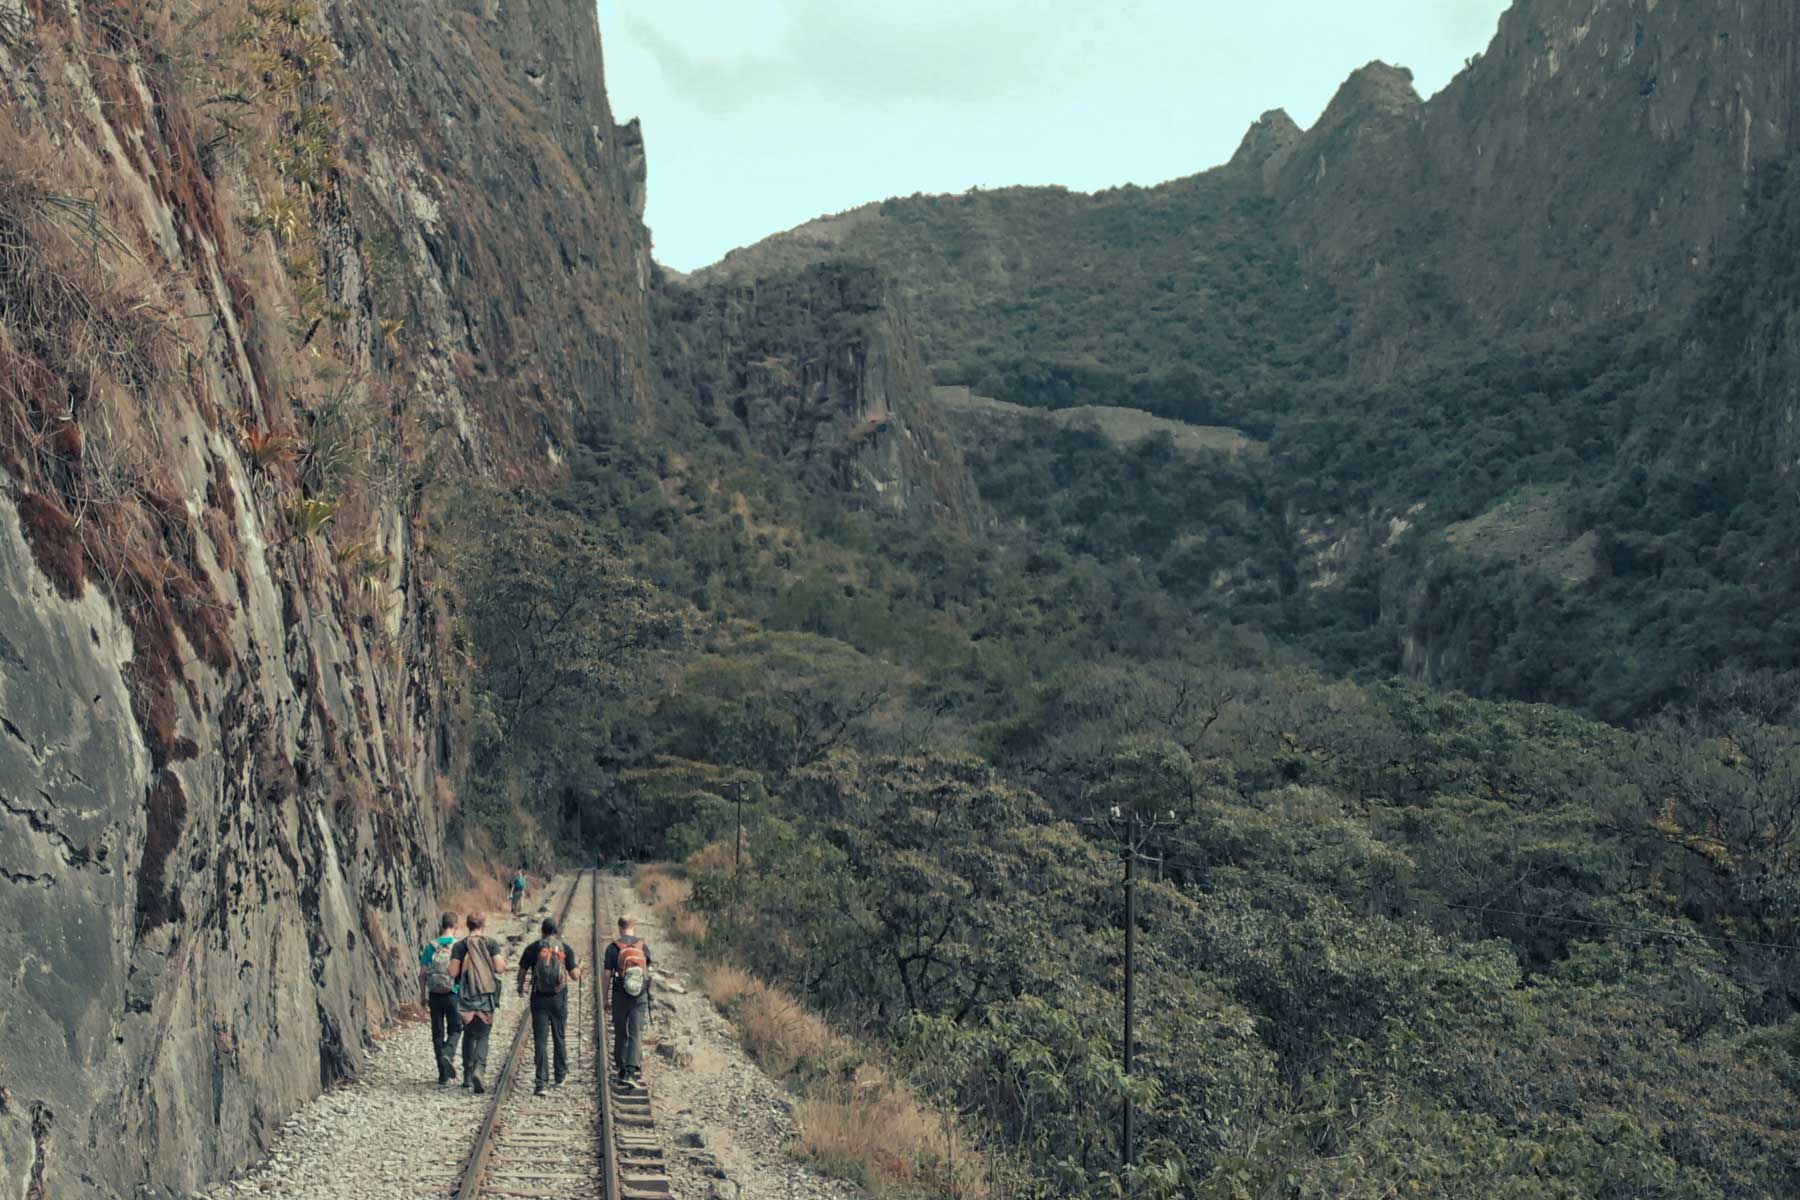 Hike to get to Machu Picchu